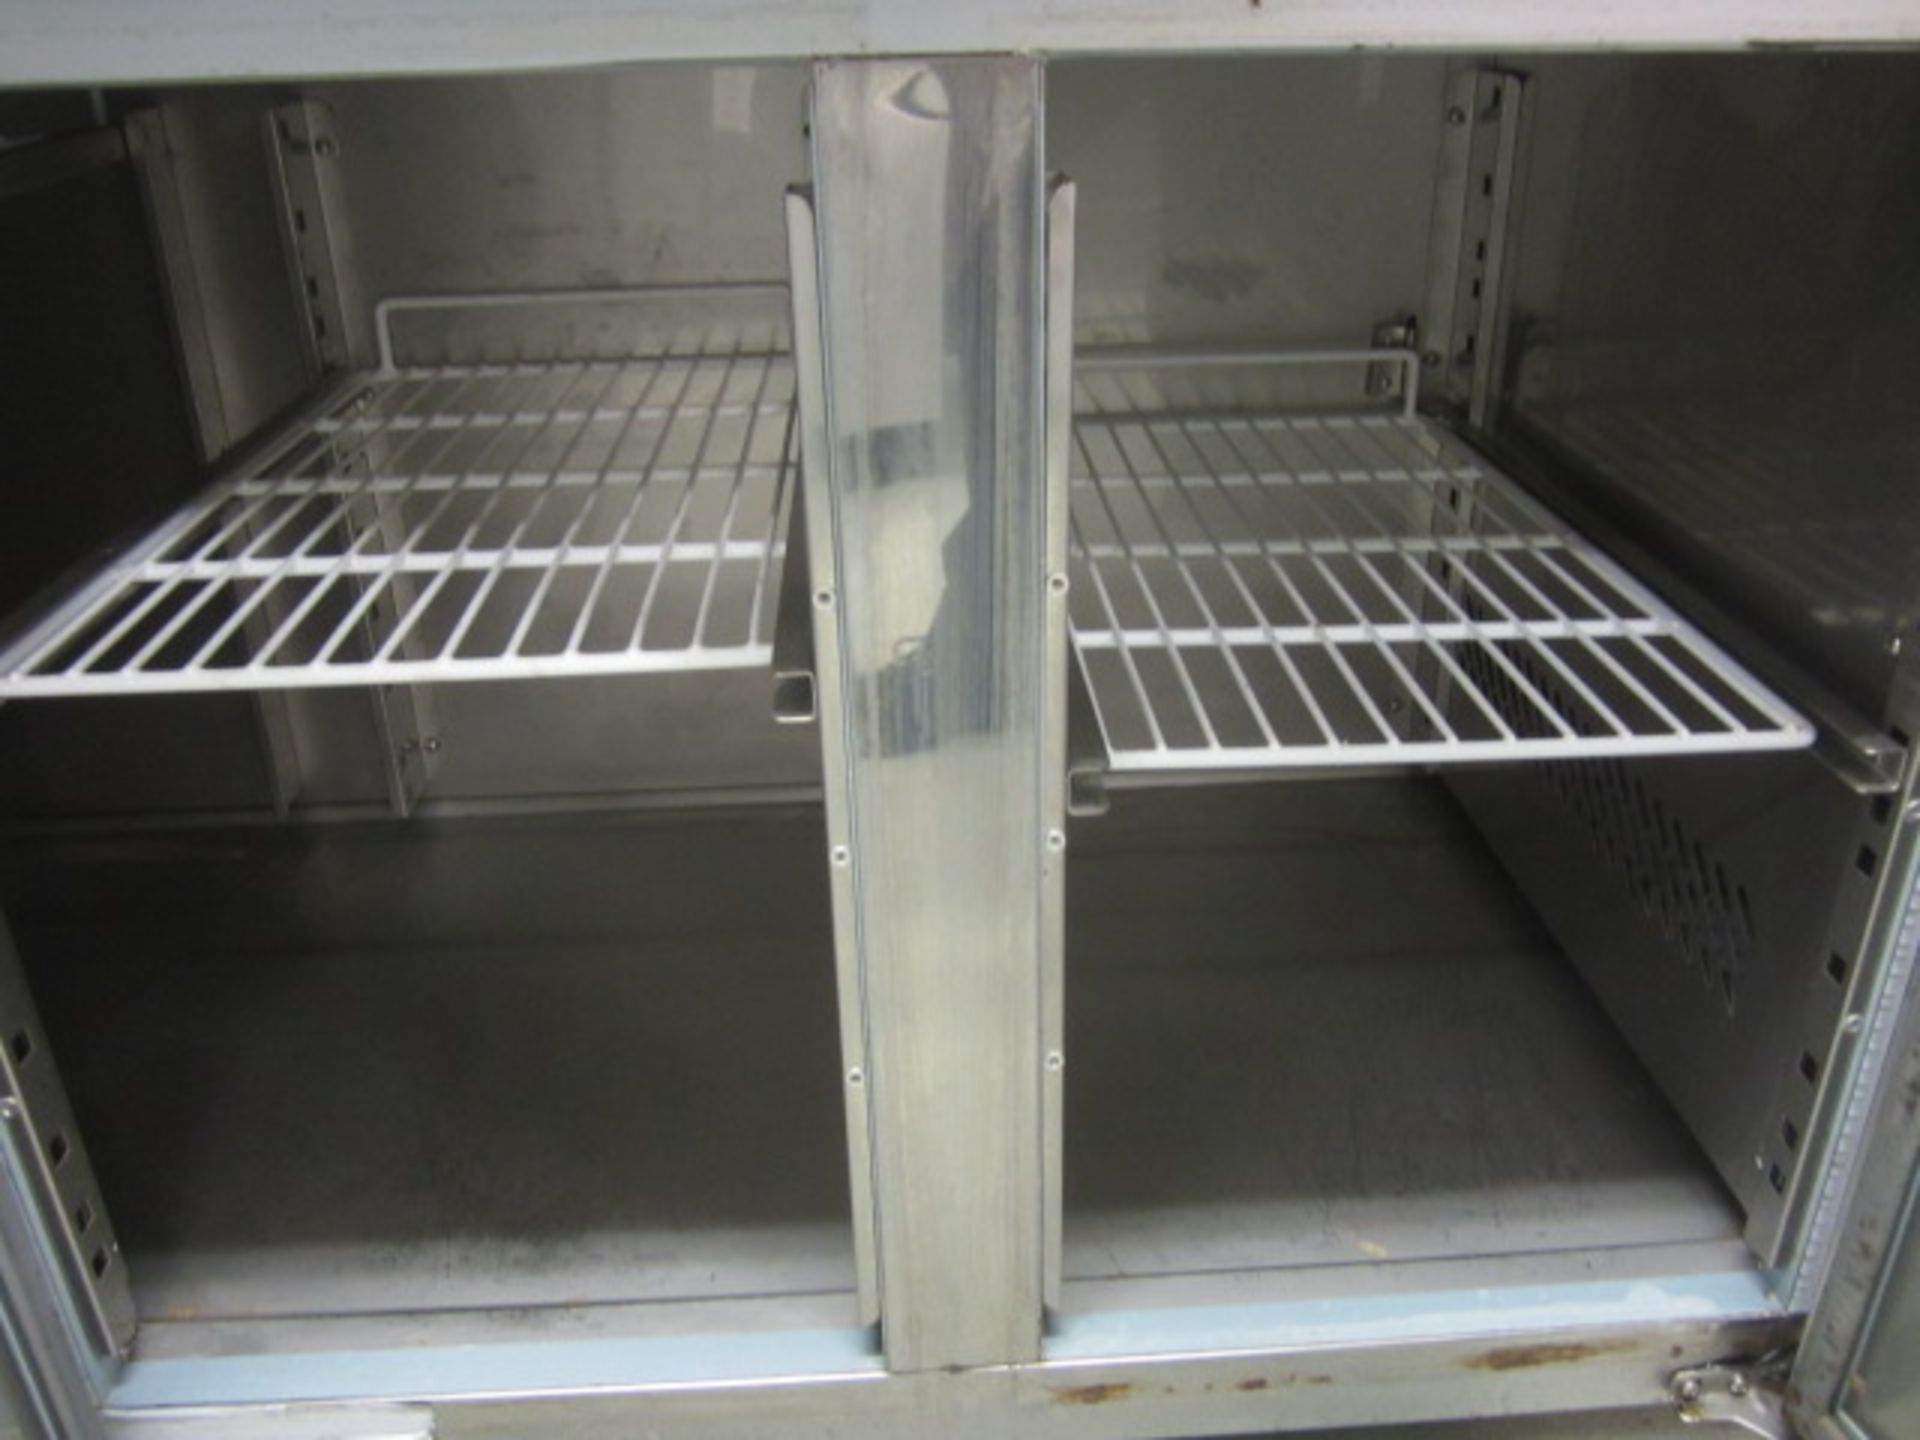 Polar stainless steel 4 door refrigerator with preparation worktop, 2230mm x 700mm x H850mm - Image 3 of 4